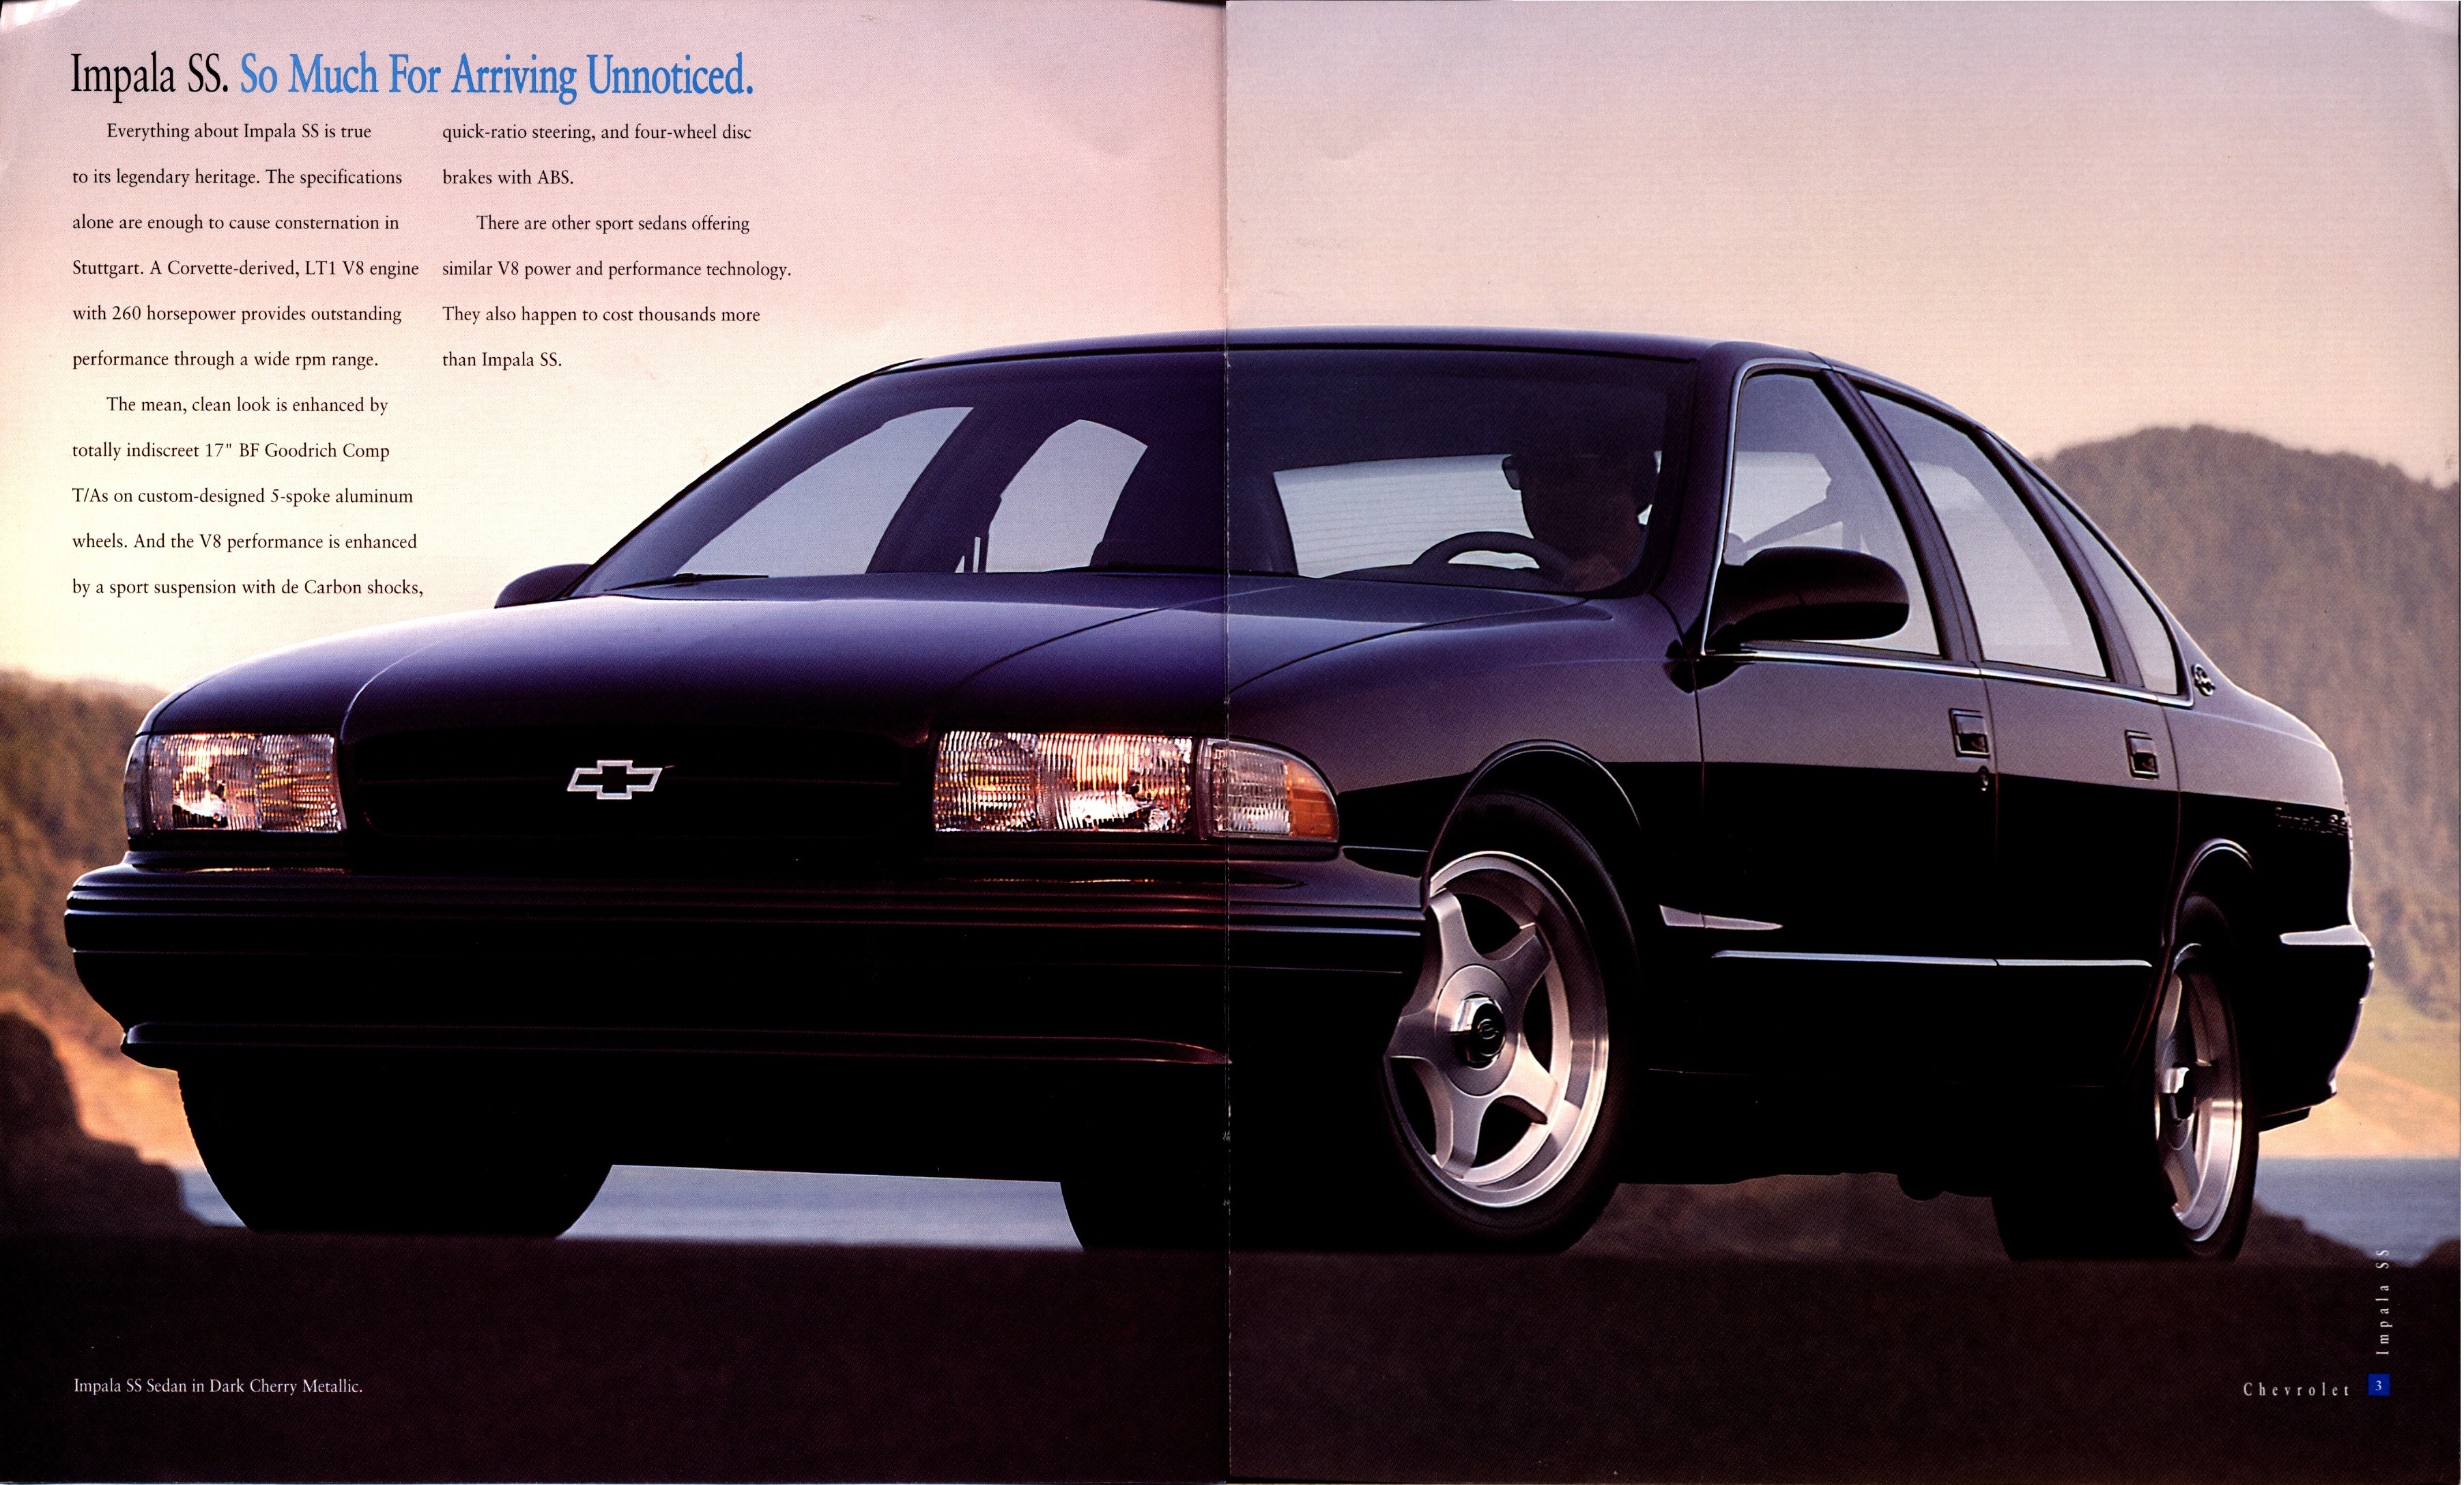 1996 Chevrolet Impala SS Brochure 02-03